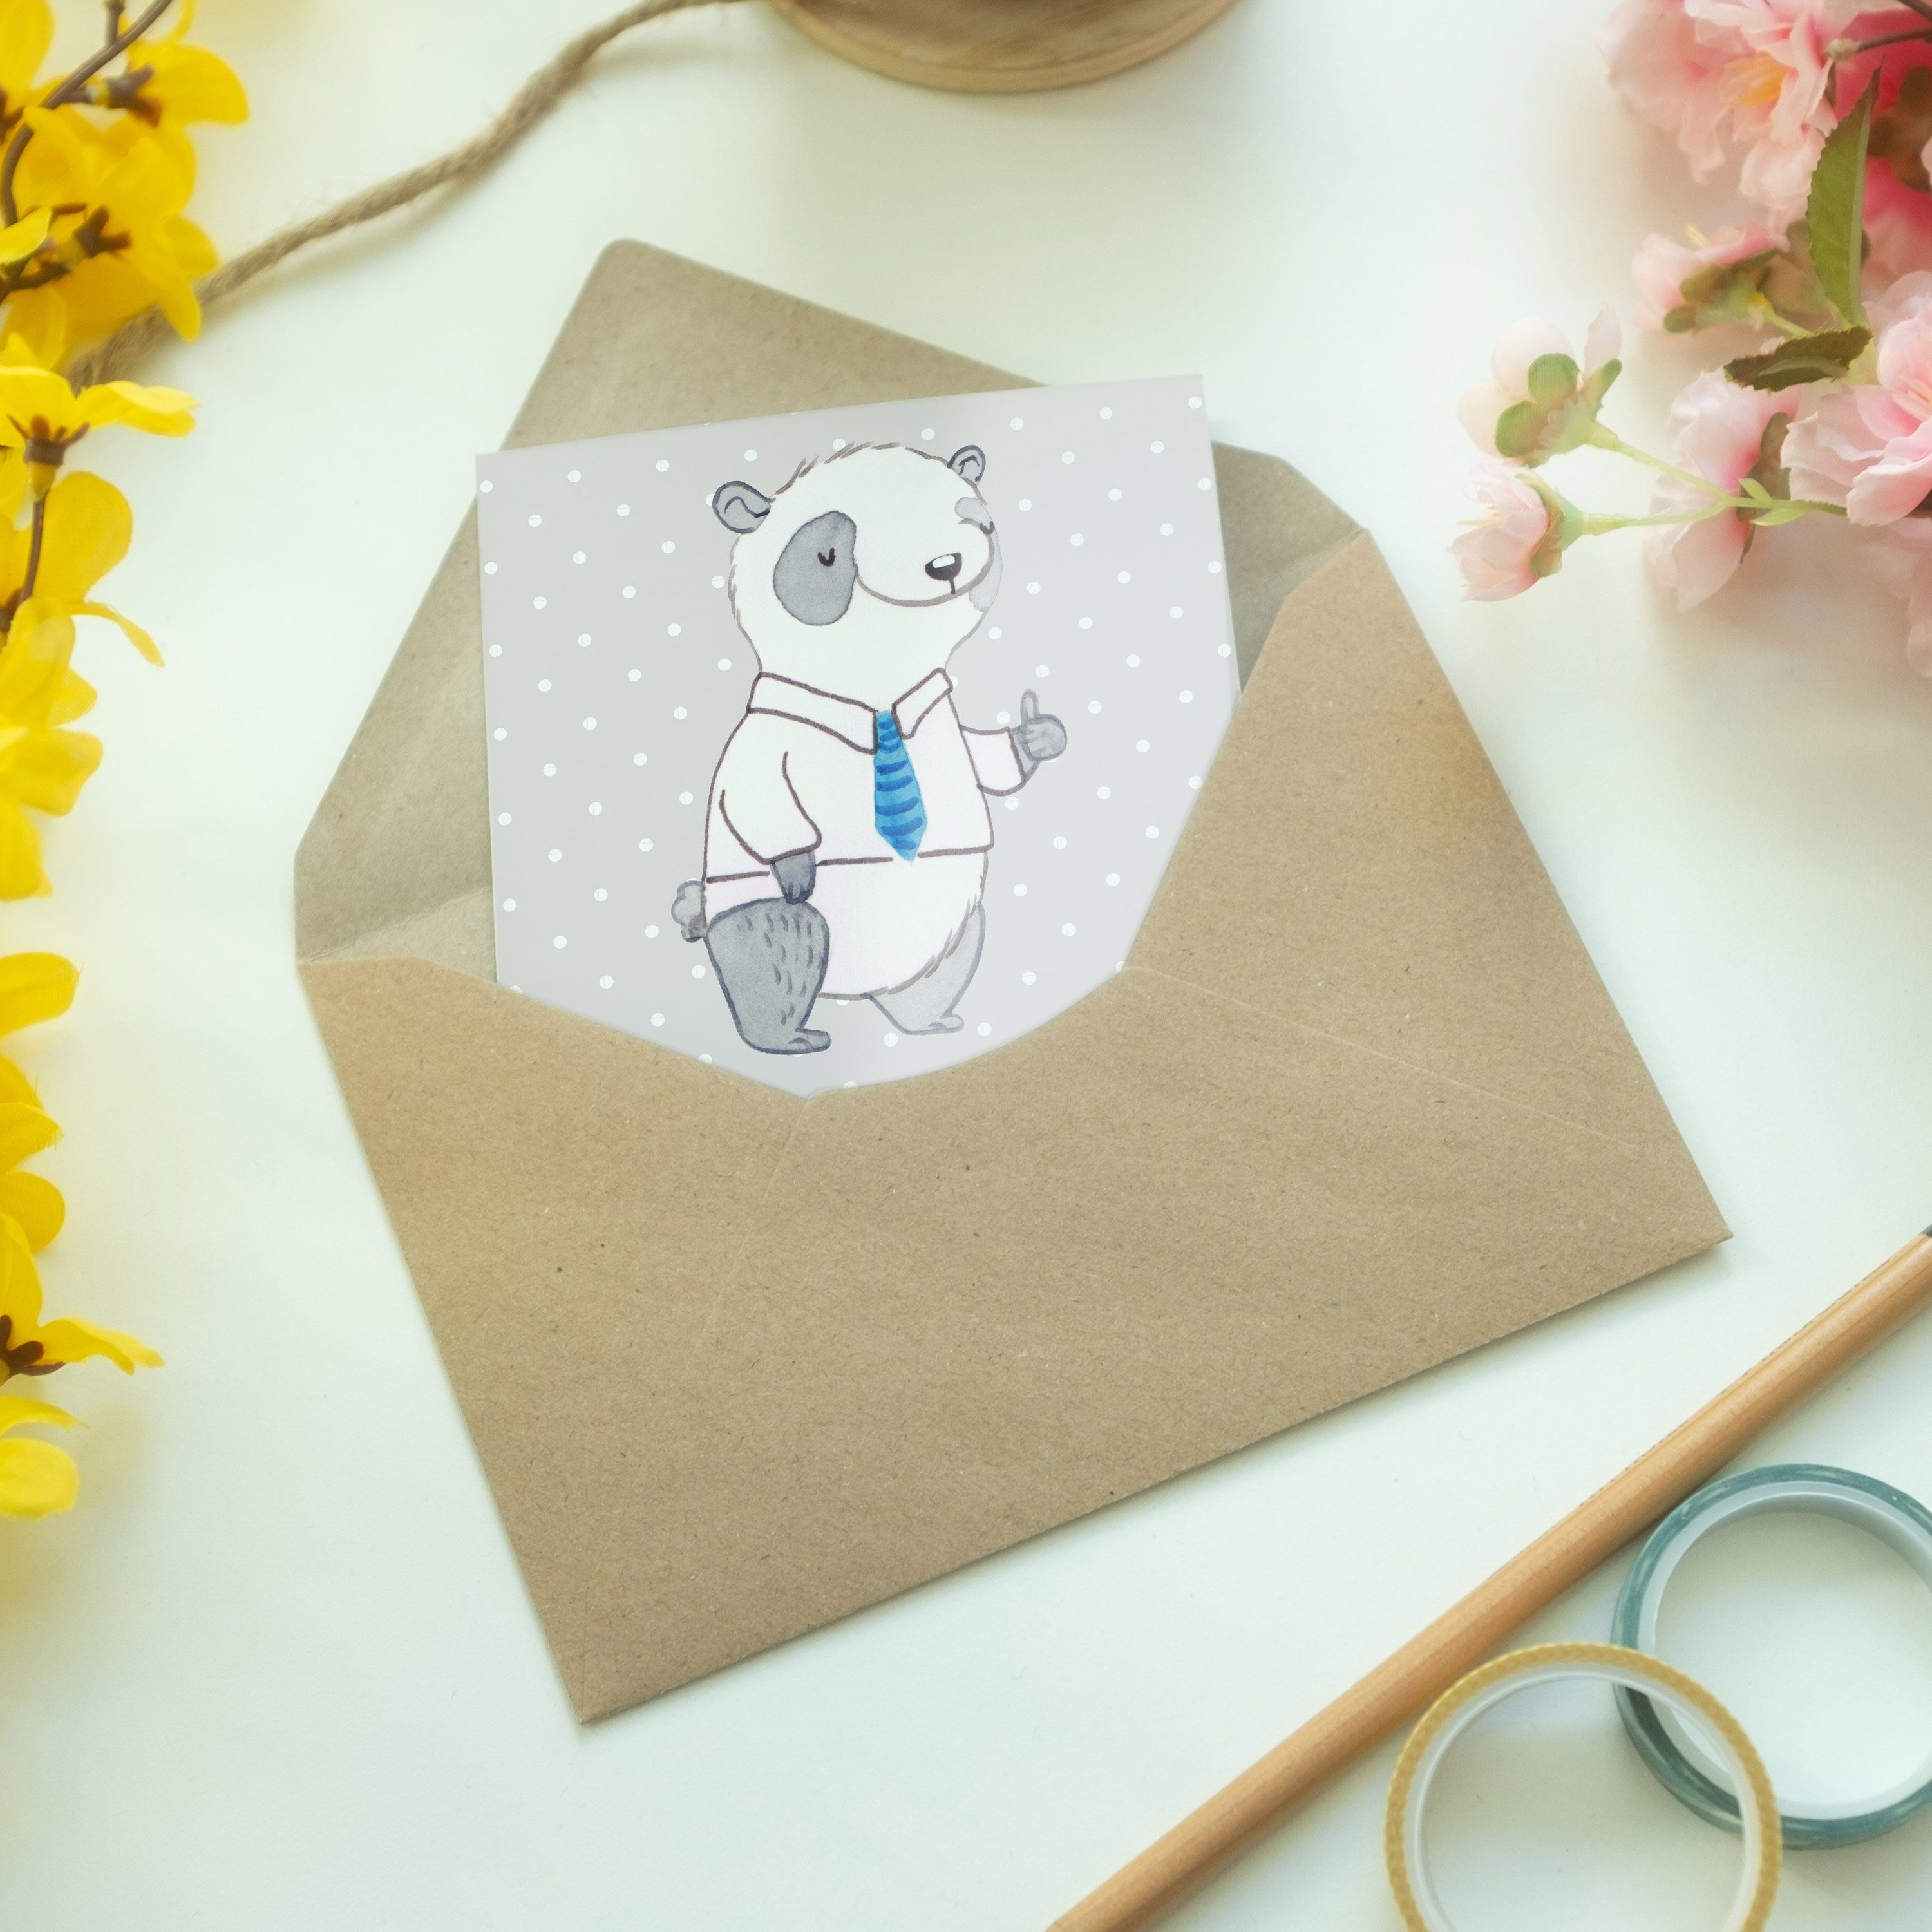 Pastell Panda & Mr. - Welt Grau Karte Mrs. Adoptivvater Bester Geschenk, Panda Grußkarte der -